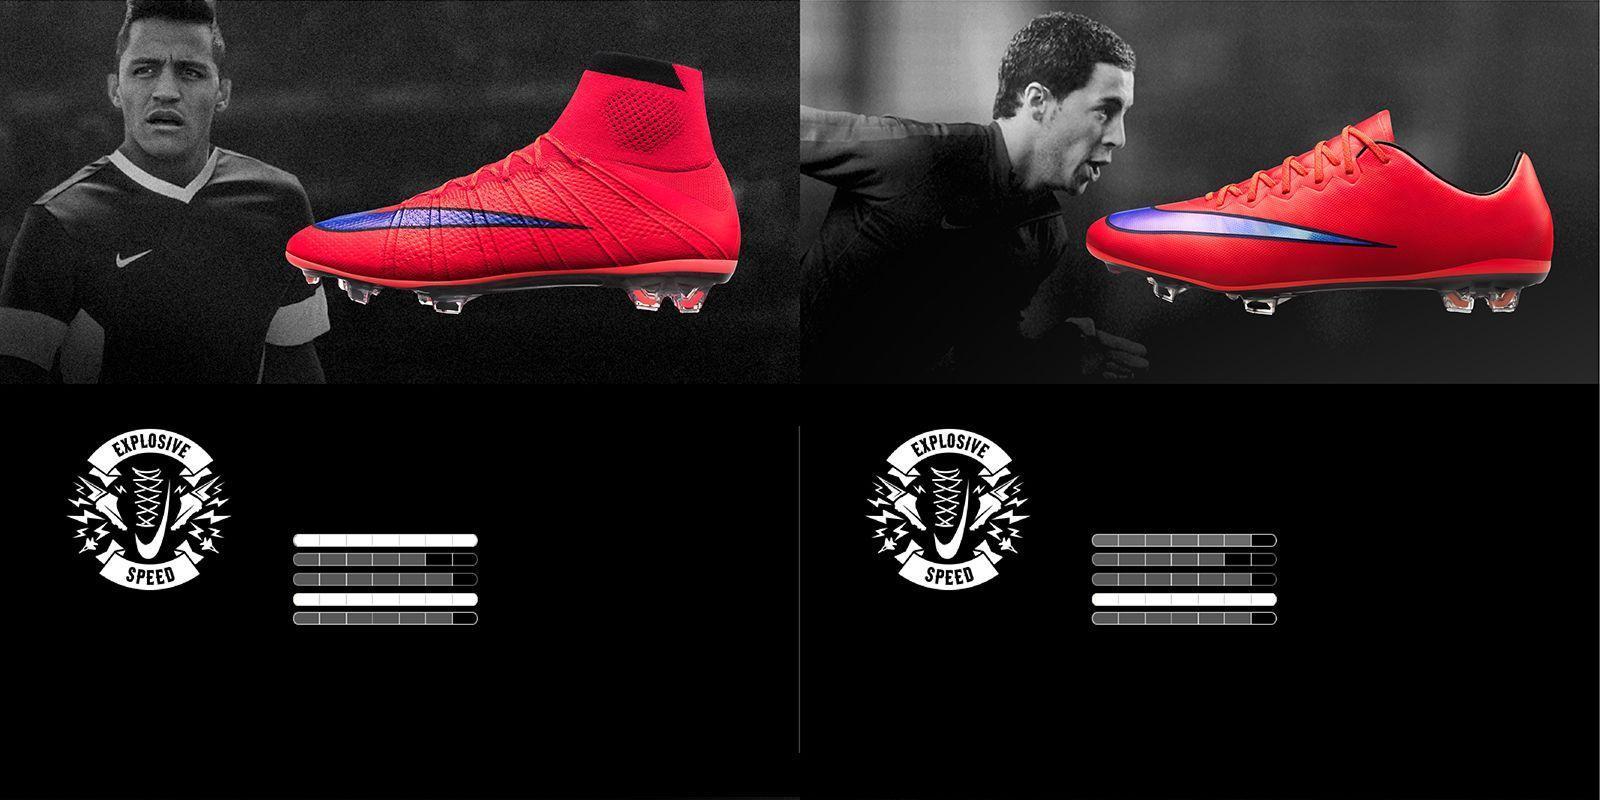 1000x1000px Nike Football Boots (116.68 KB).06.2015